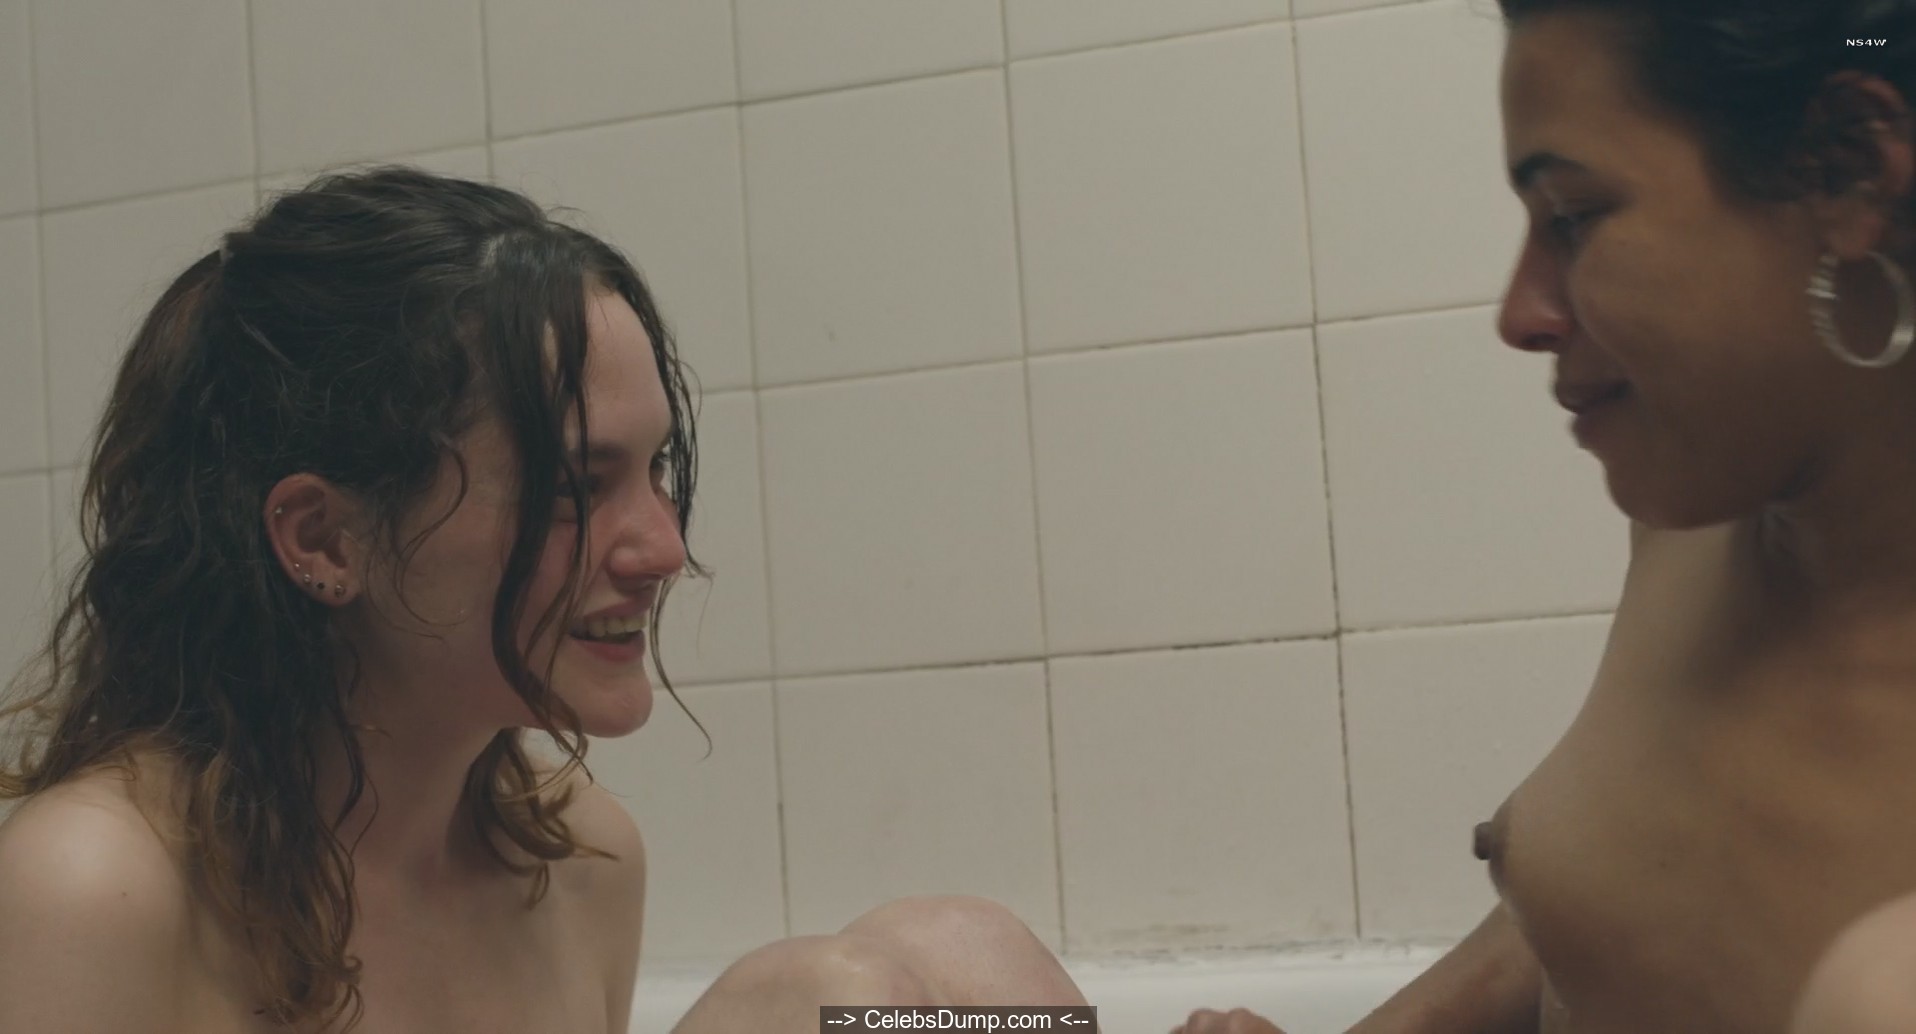 Zita Hanrot & Clemence Boisnard nude in a bathtub.